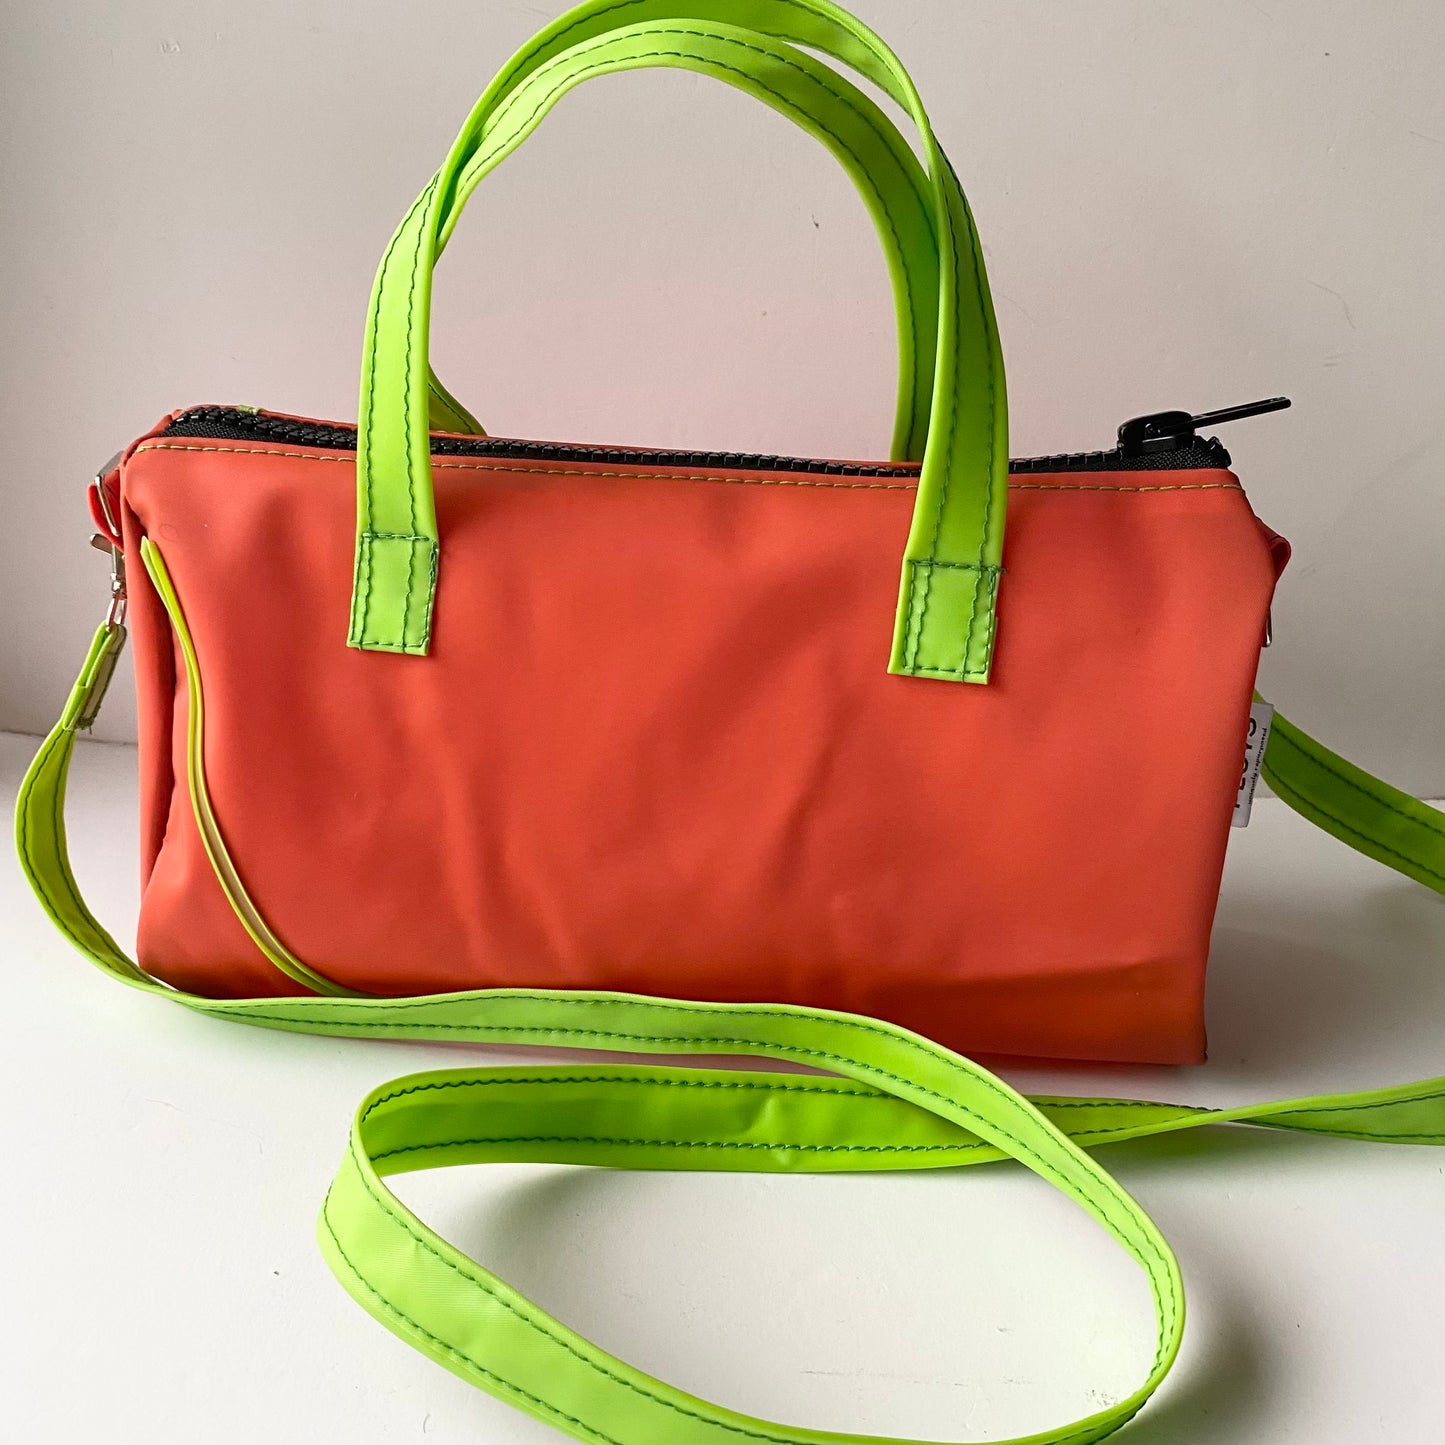 Retro Handbags - ex inflatables - variety of colours